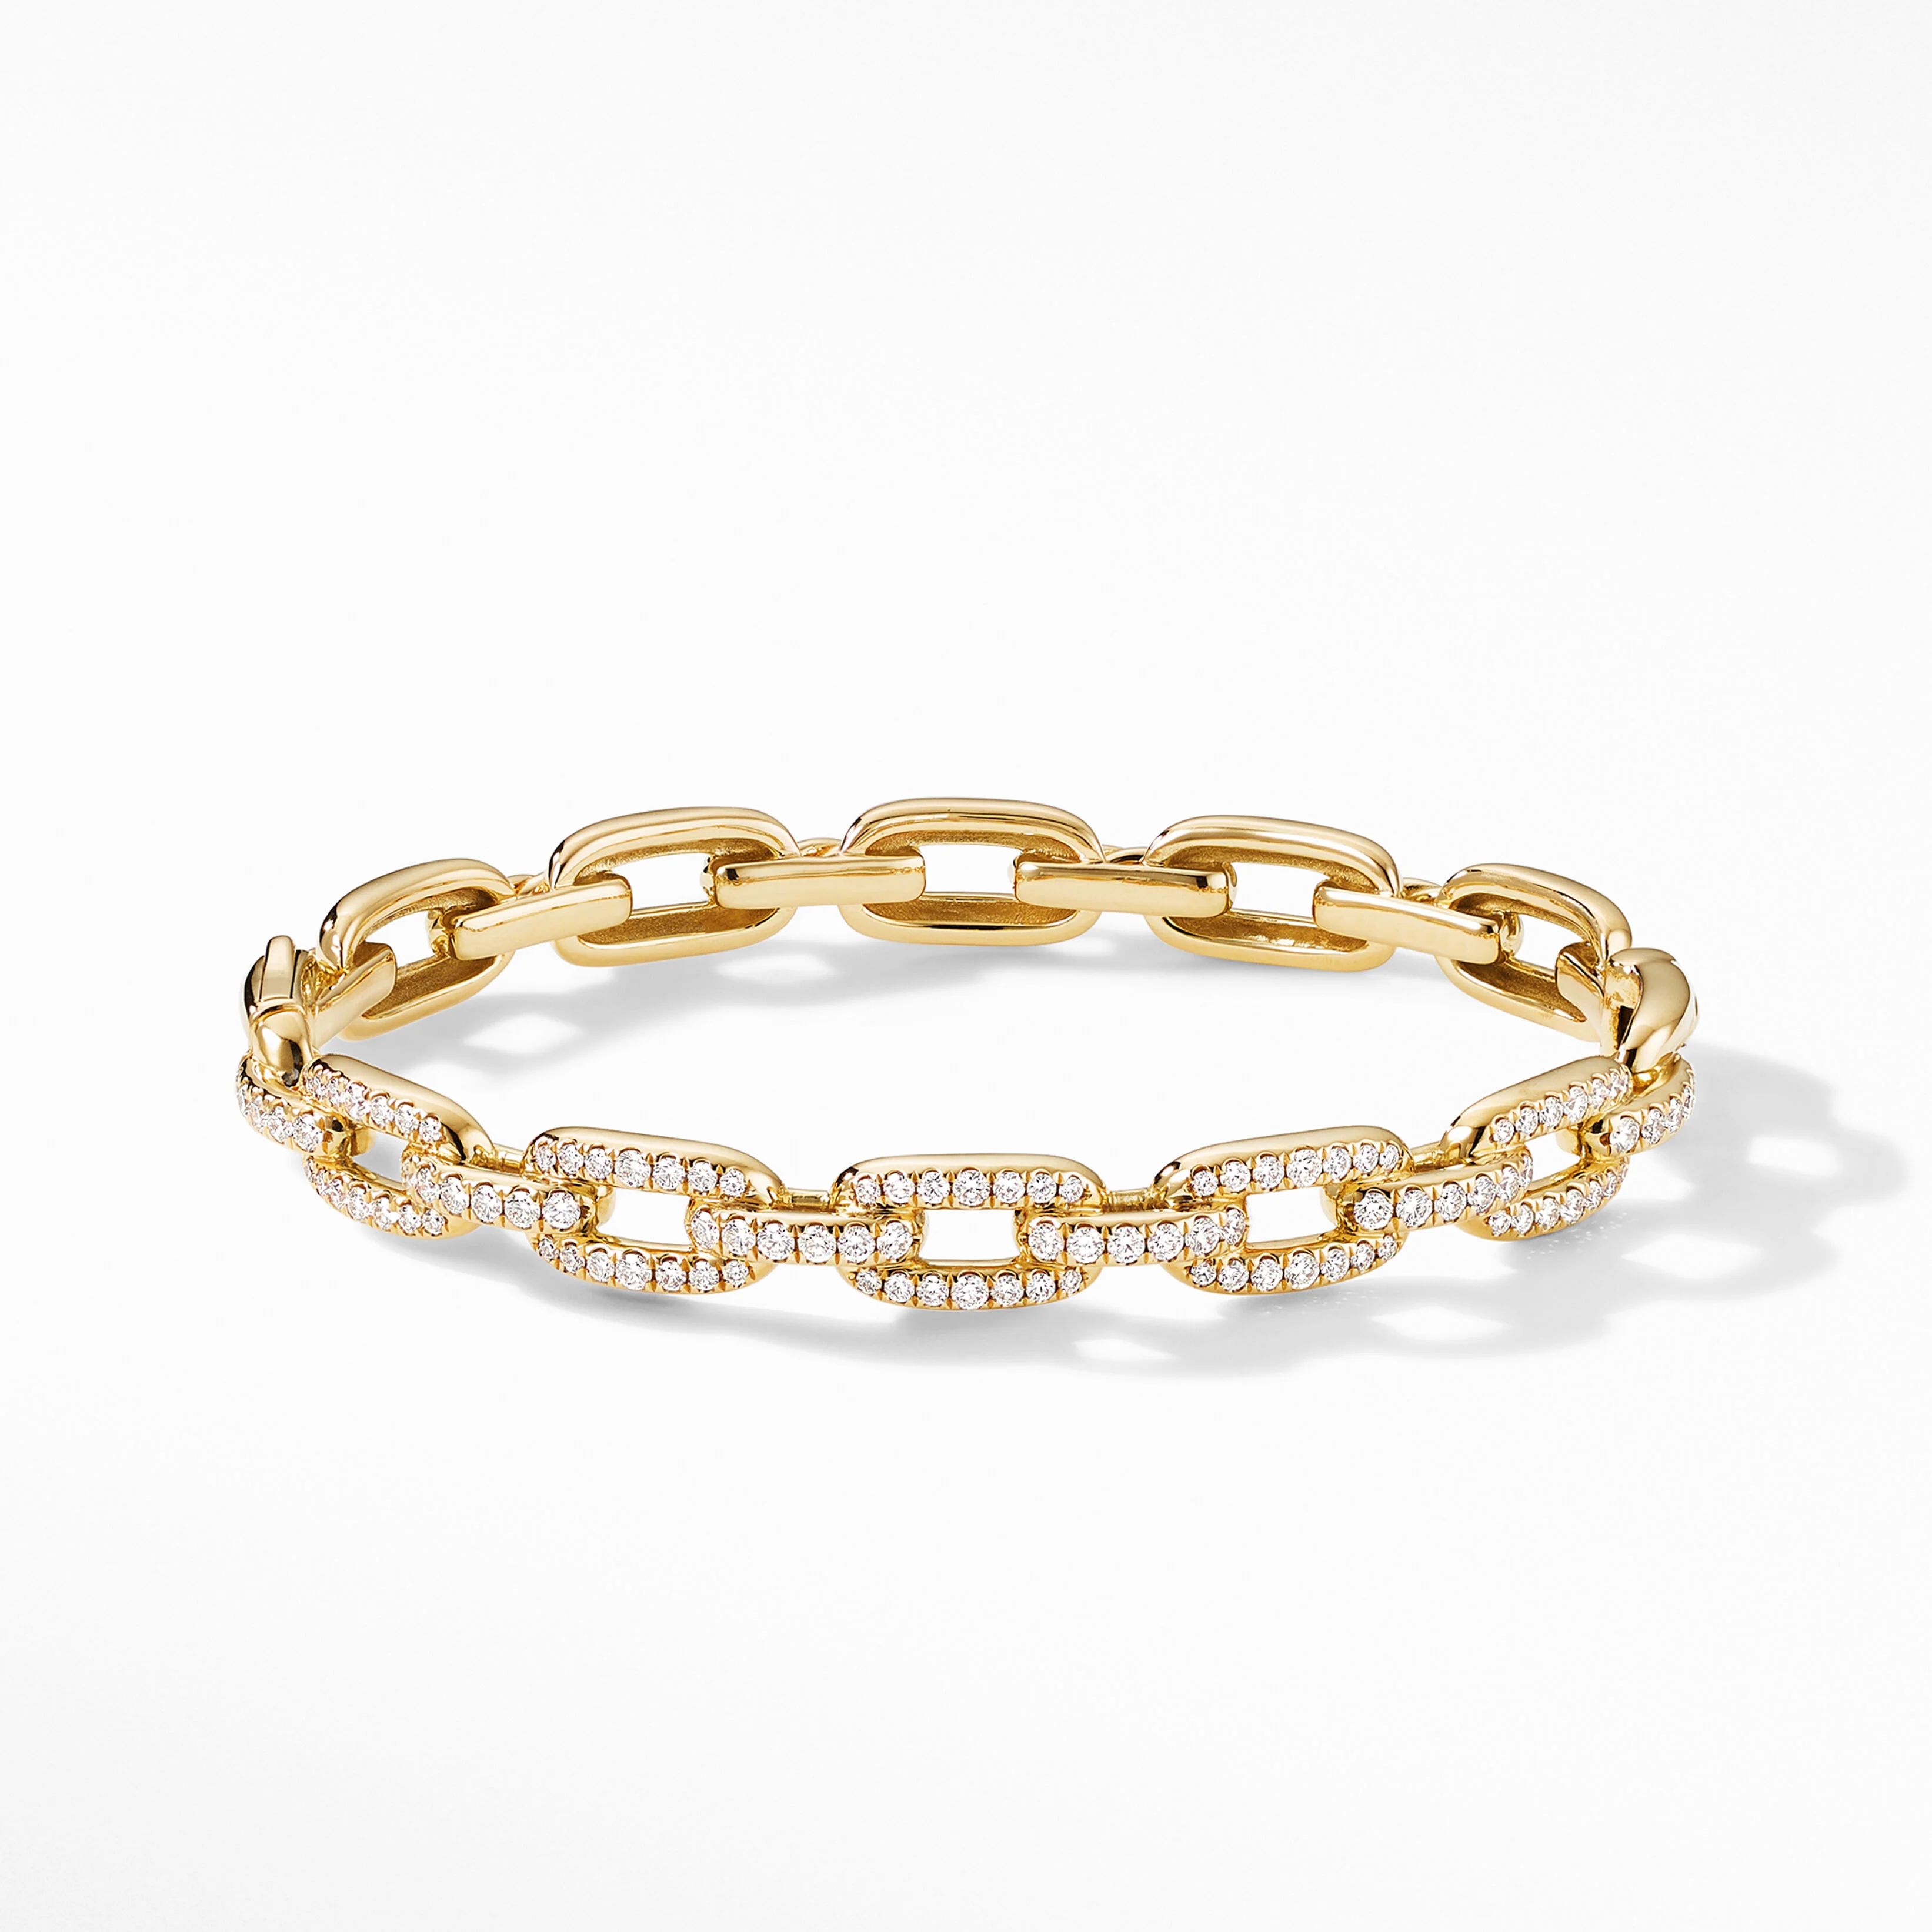 Stax Chain Link Bracelet in 18K Yellow Gold with Pavé Diamonds | David Yurman